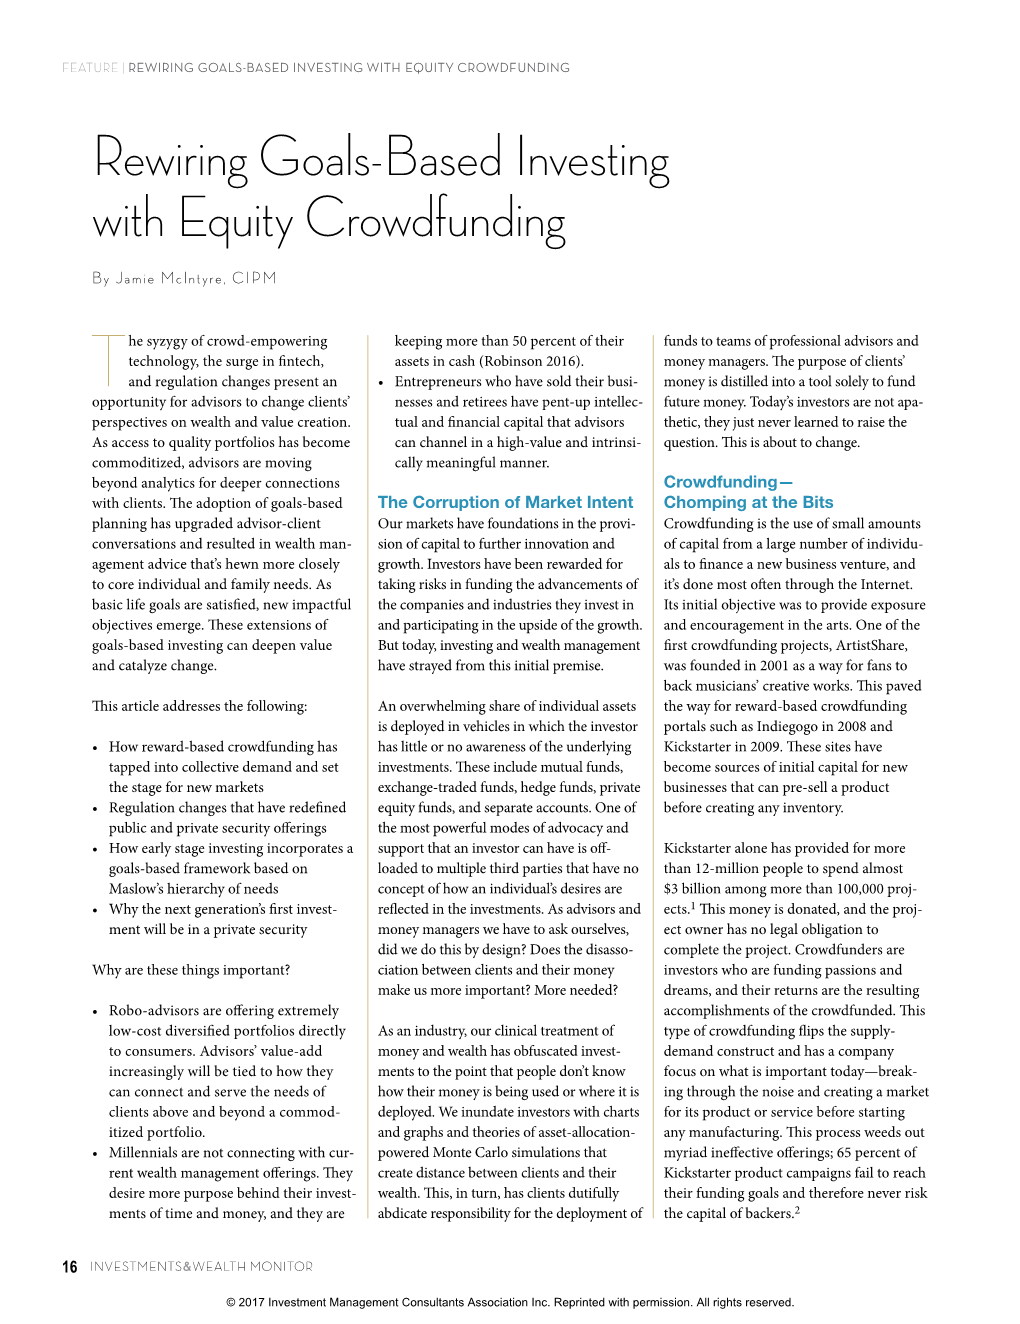 Equity Crowdfunding Rewiring Goals-Based Investing with Equity Crowdfunding